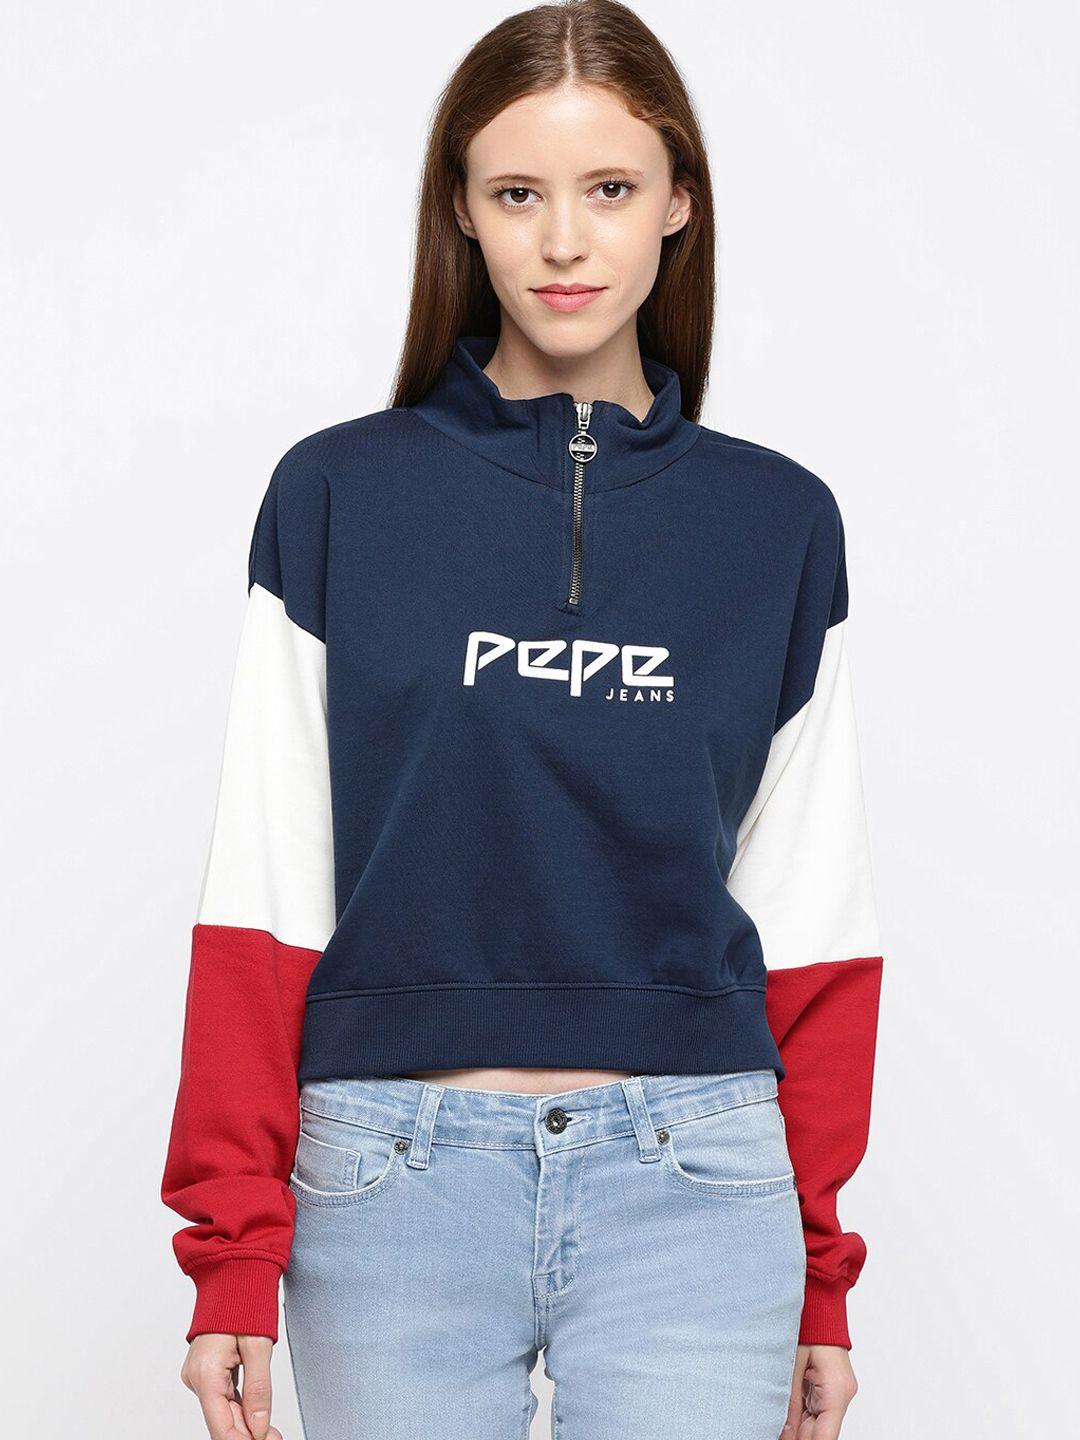 pepe jeans women navy blue & white printed sweatshirt